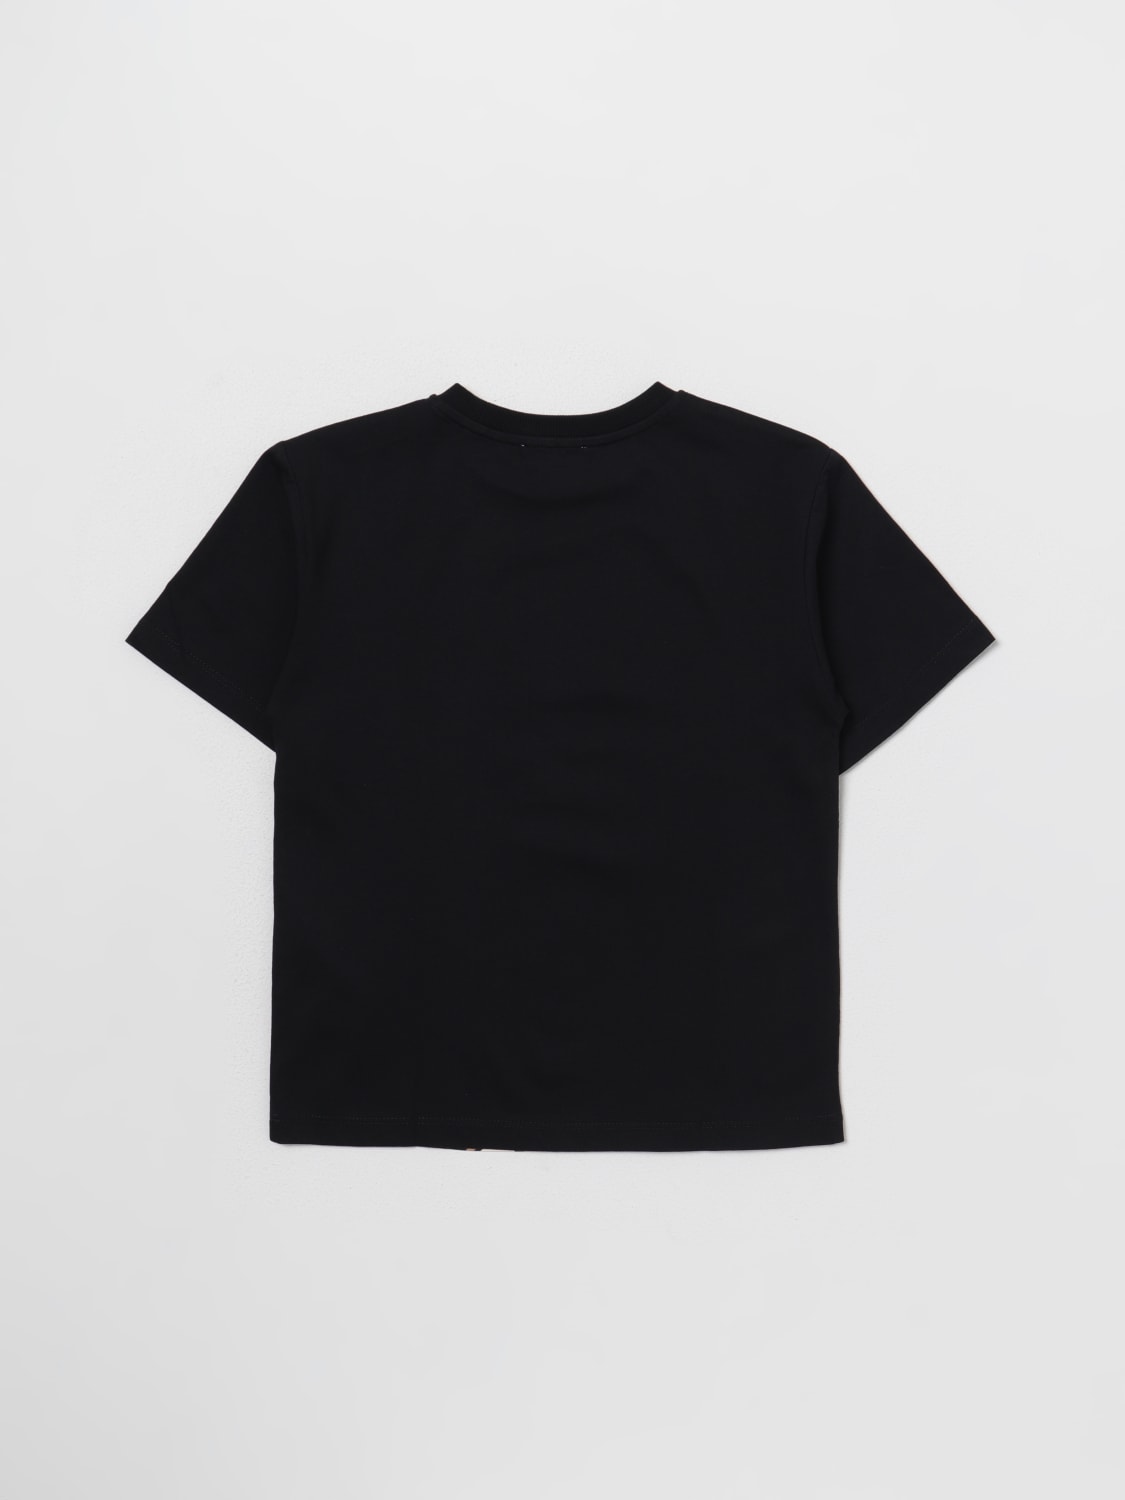 MOSCHINO KID: cotton t-shirt with print - Black | Moschino Kid t-shirt ...